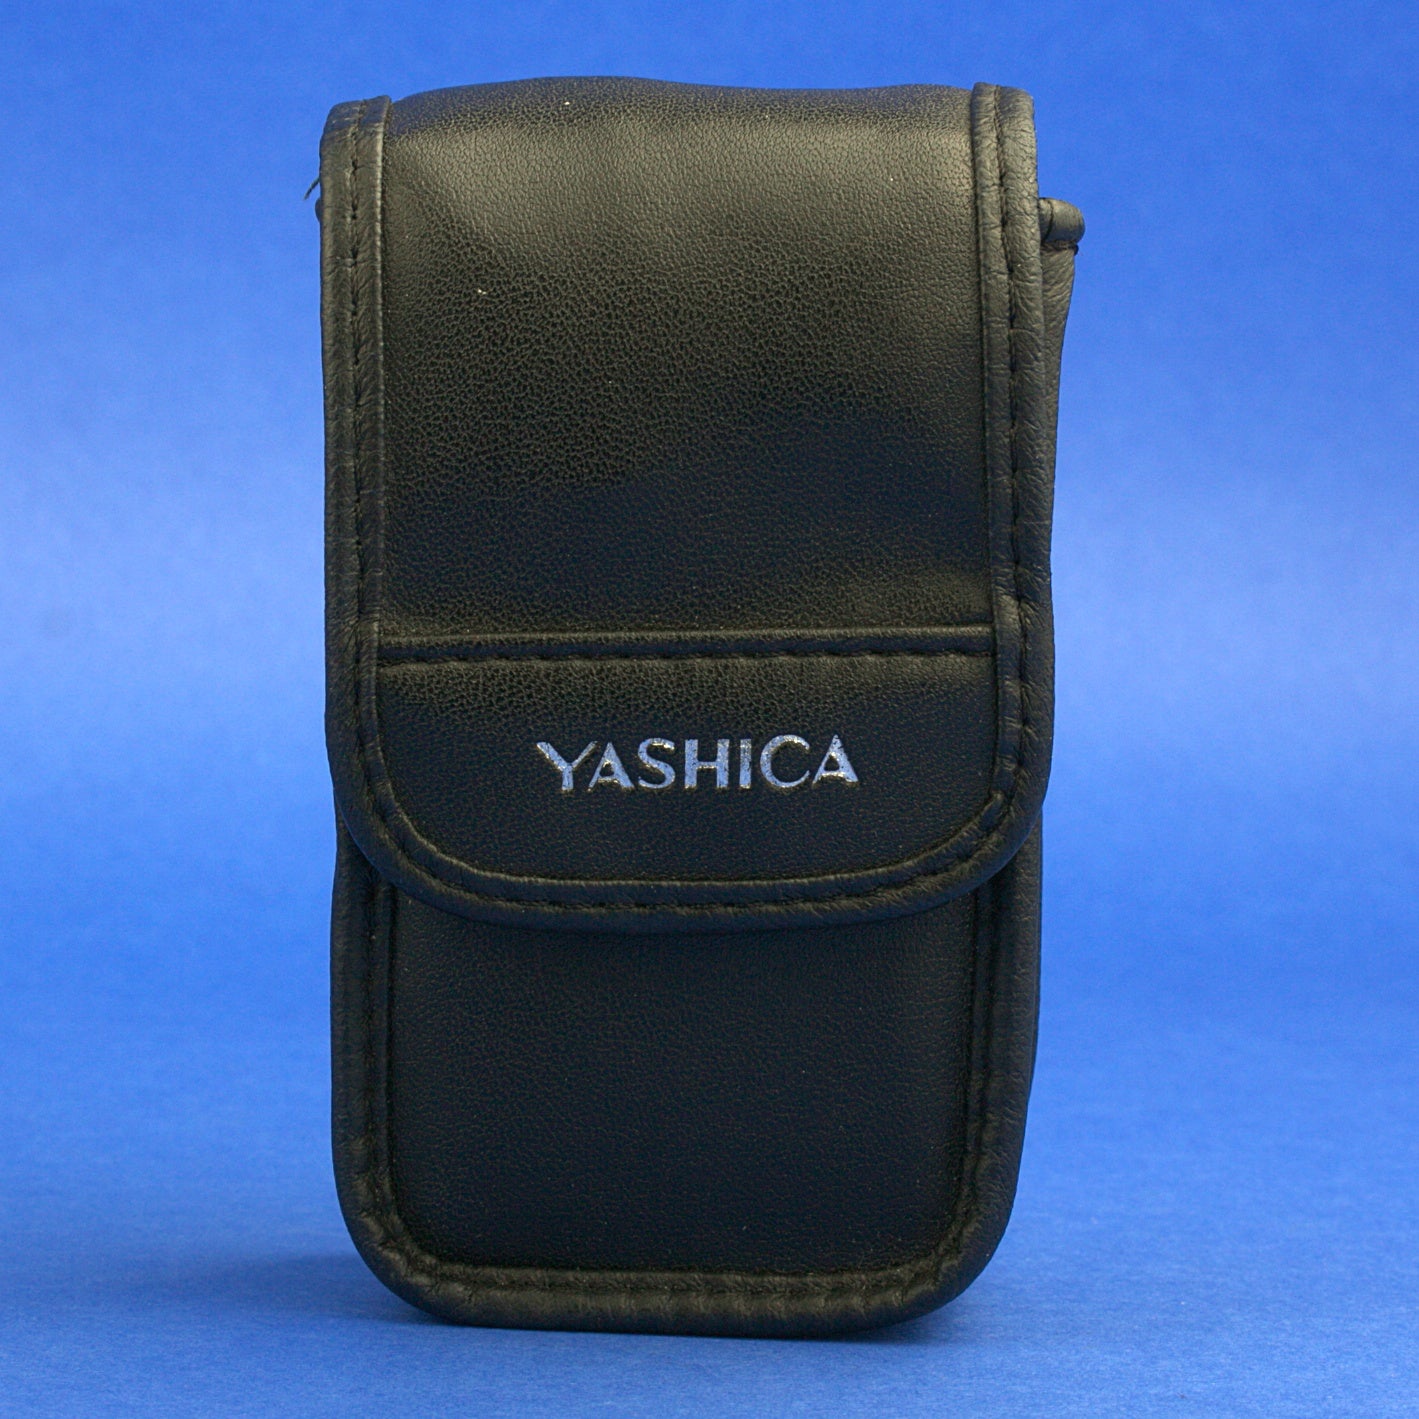 Yashica T4 Film Camera Beautiful Condition